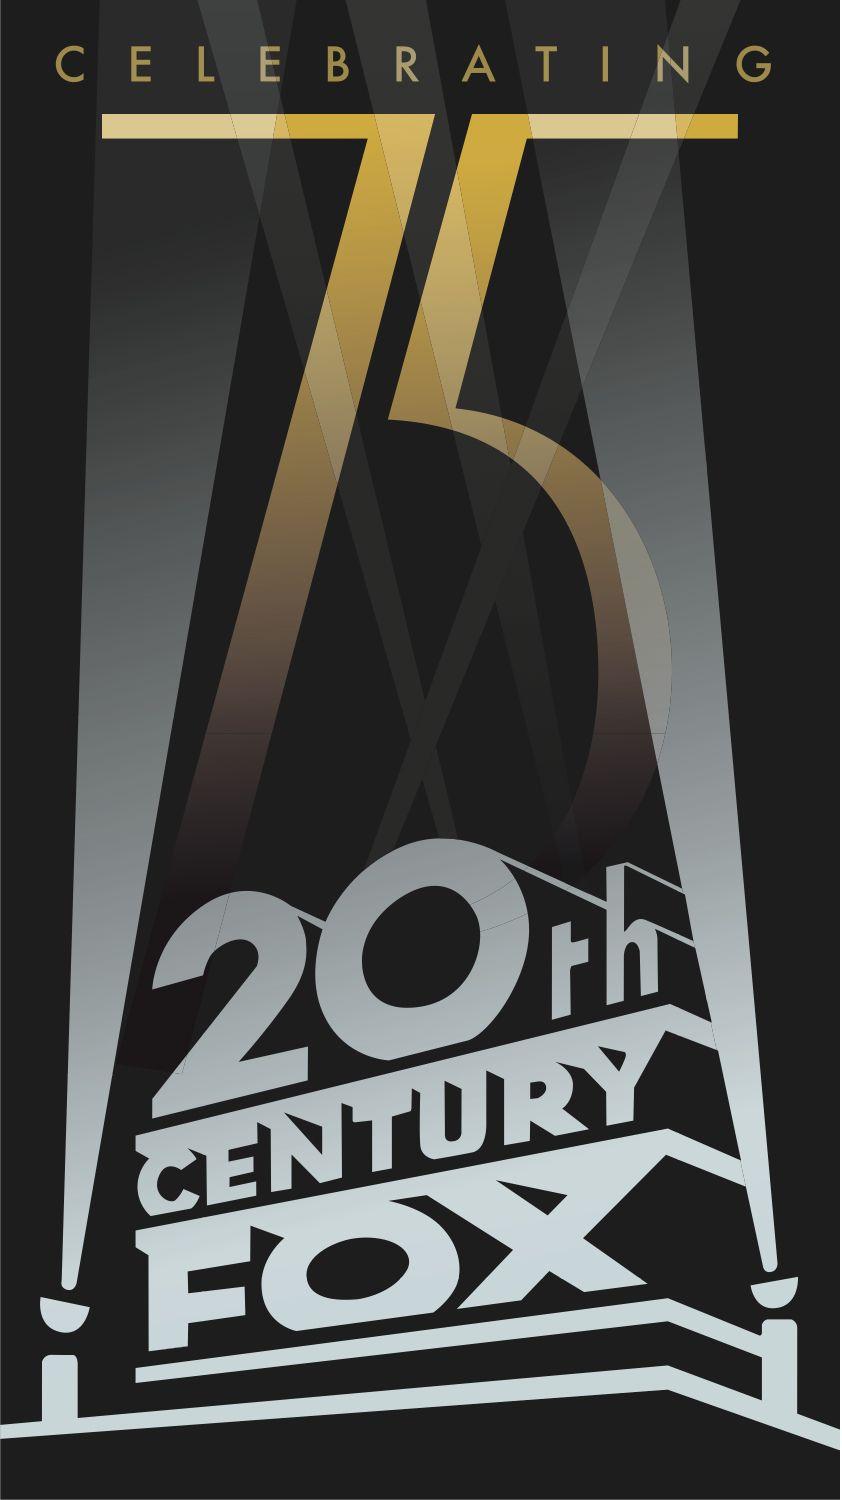 20th Century Fox DVD Logo - 20th Century Fox Releasing 75-Film Box Set To Honor 75th Anniversary